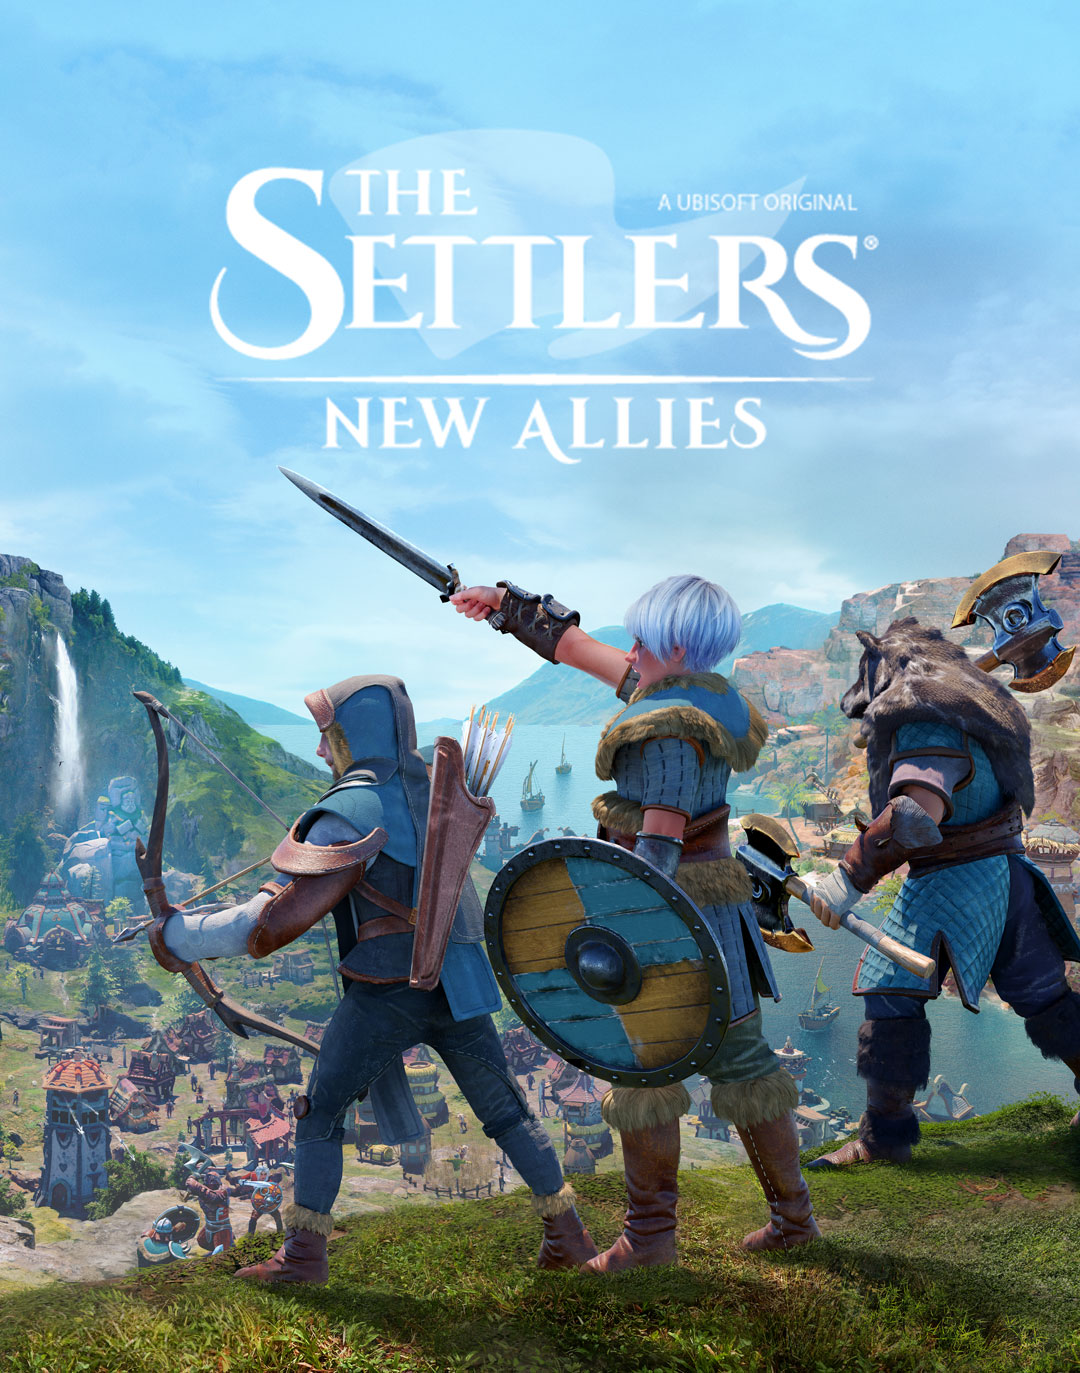 UK) Allies Settlers: | / The Ubisoft New (EU